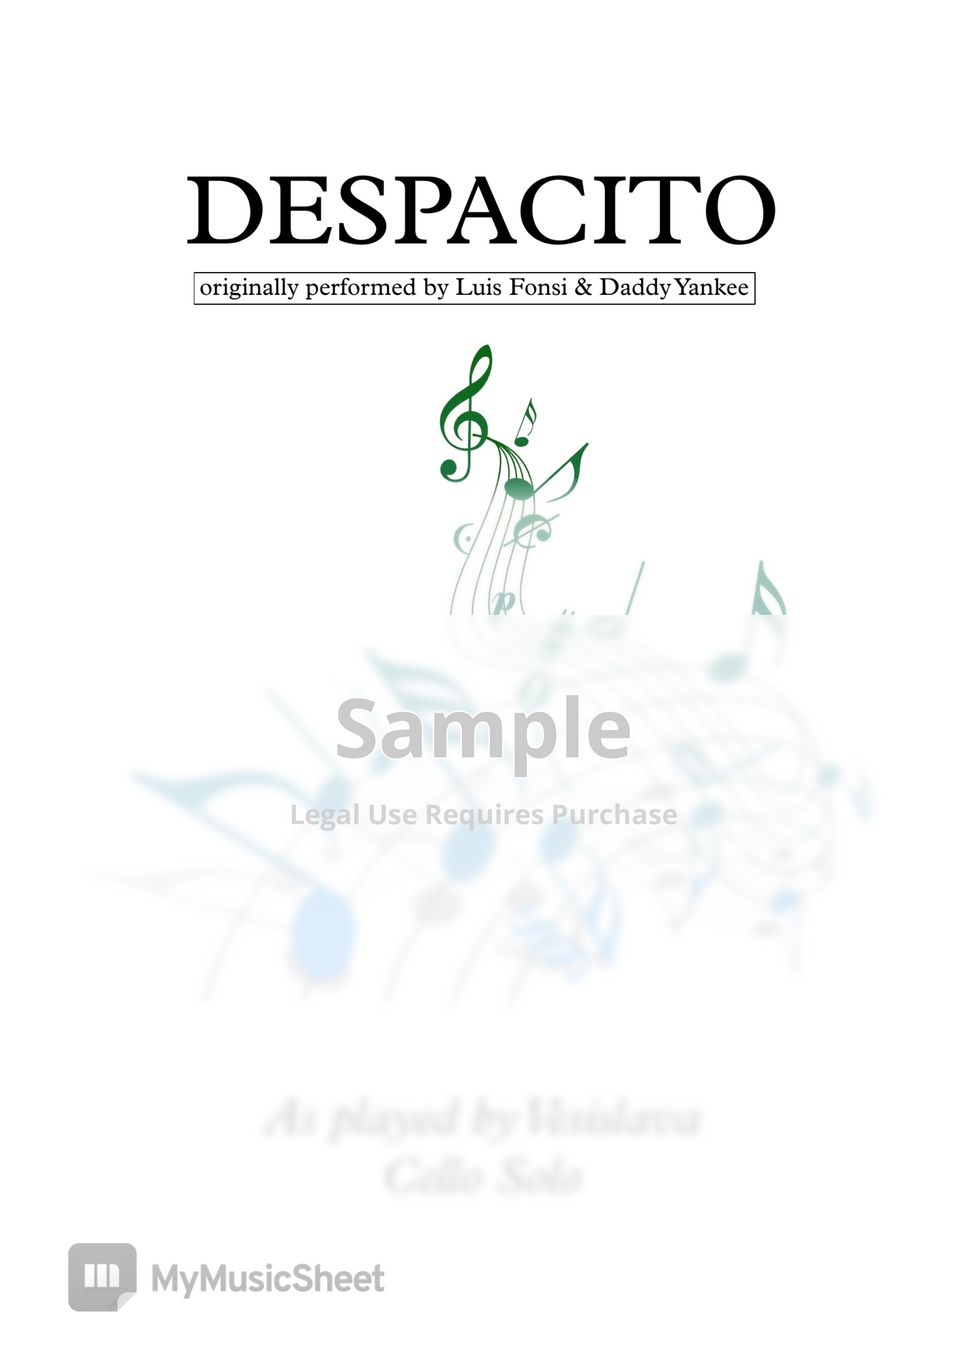 Luis Fonsy & Daddy Yankee - Despacito (+Finger marks) by Vesislava